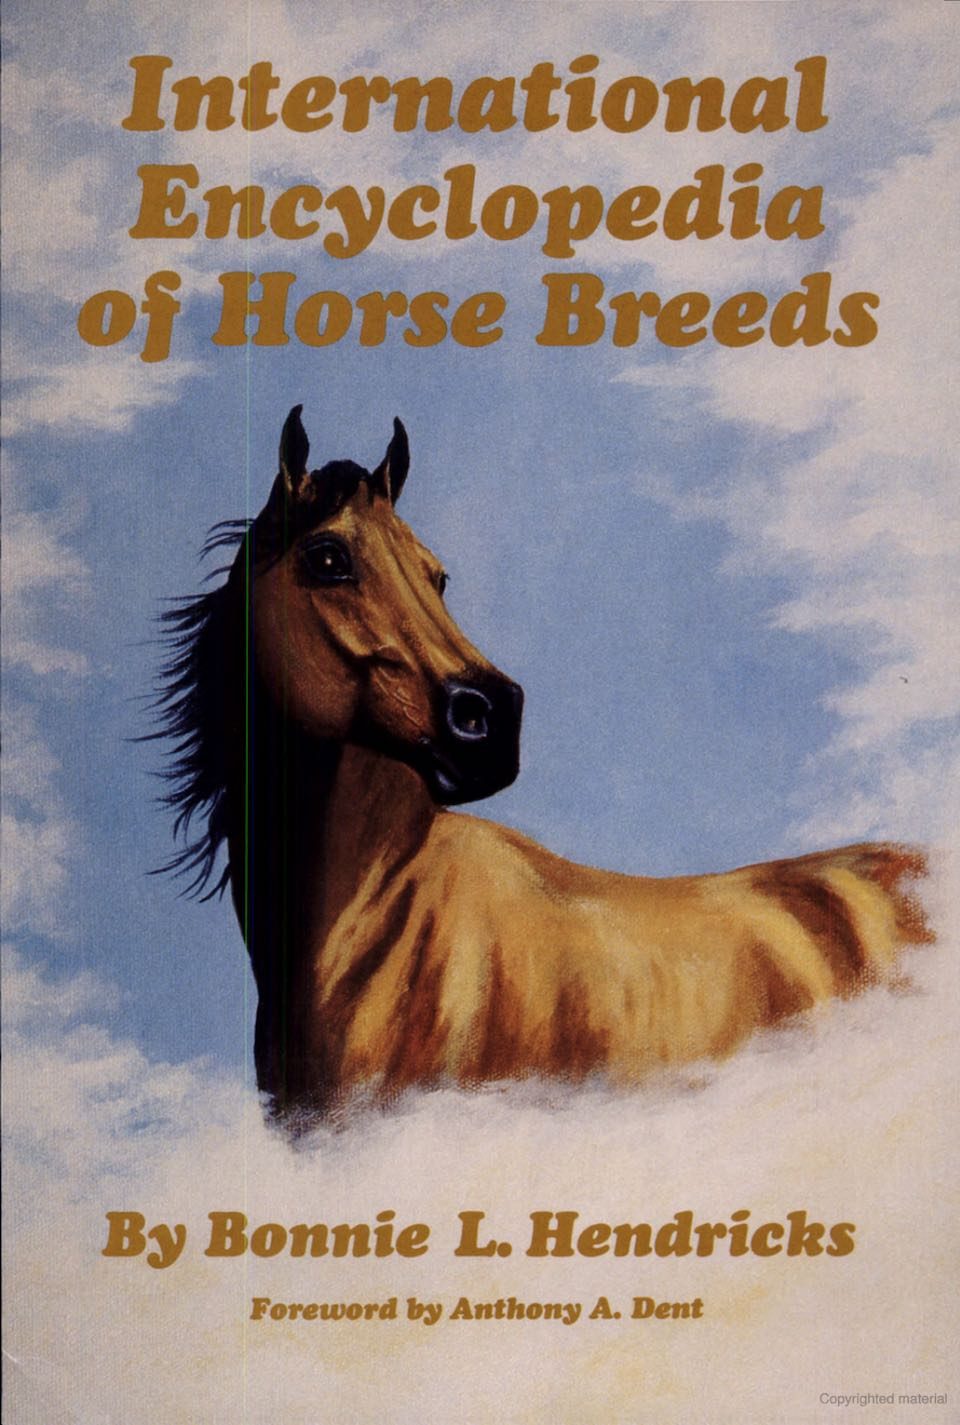 Encyclopedia of Horse Breeds - Bonnie L. Hendricks